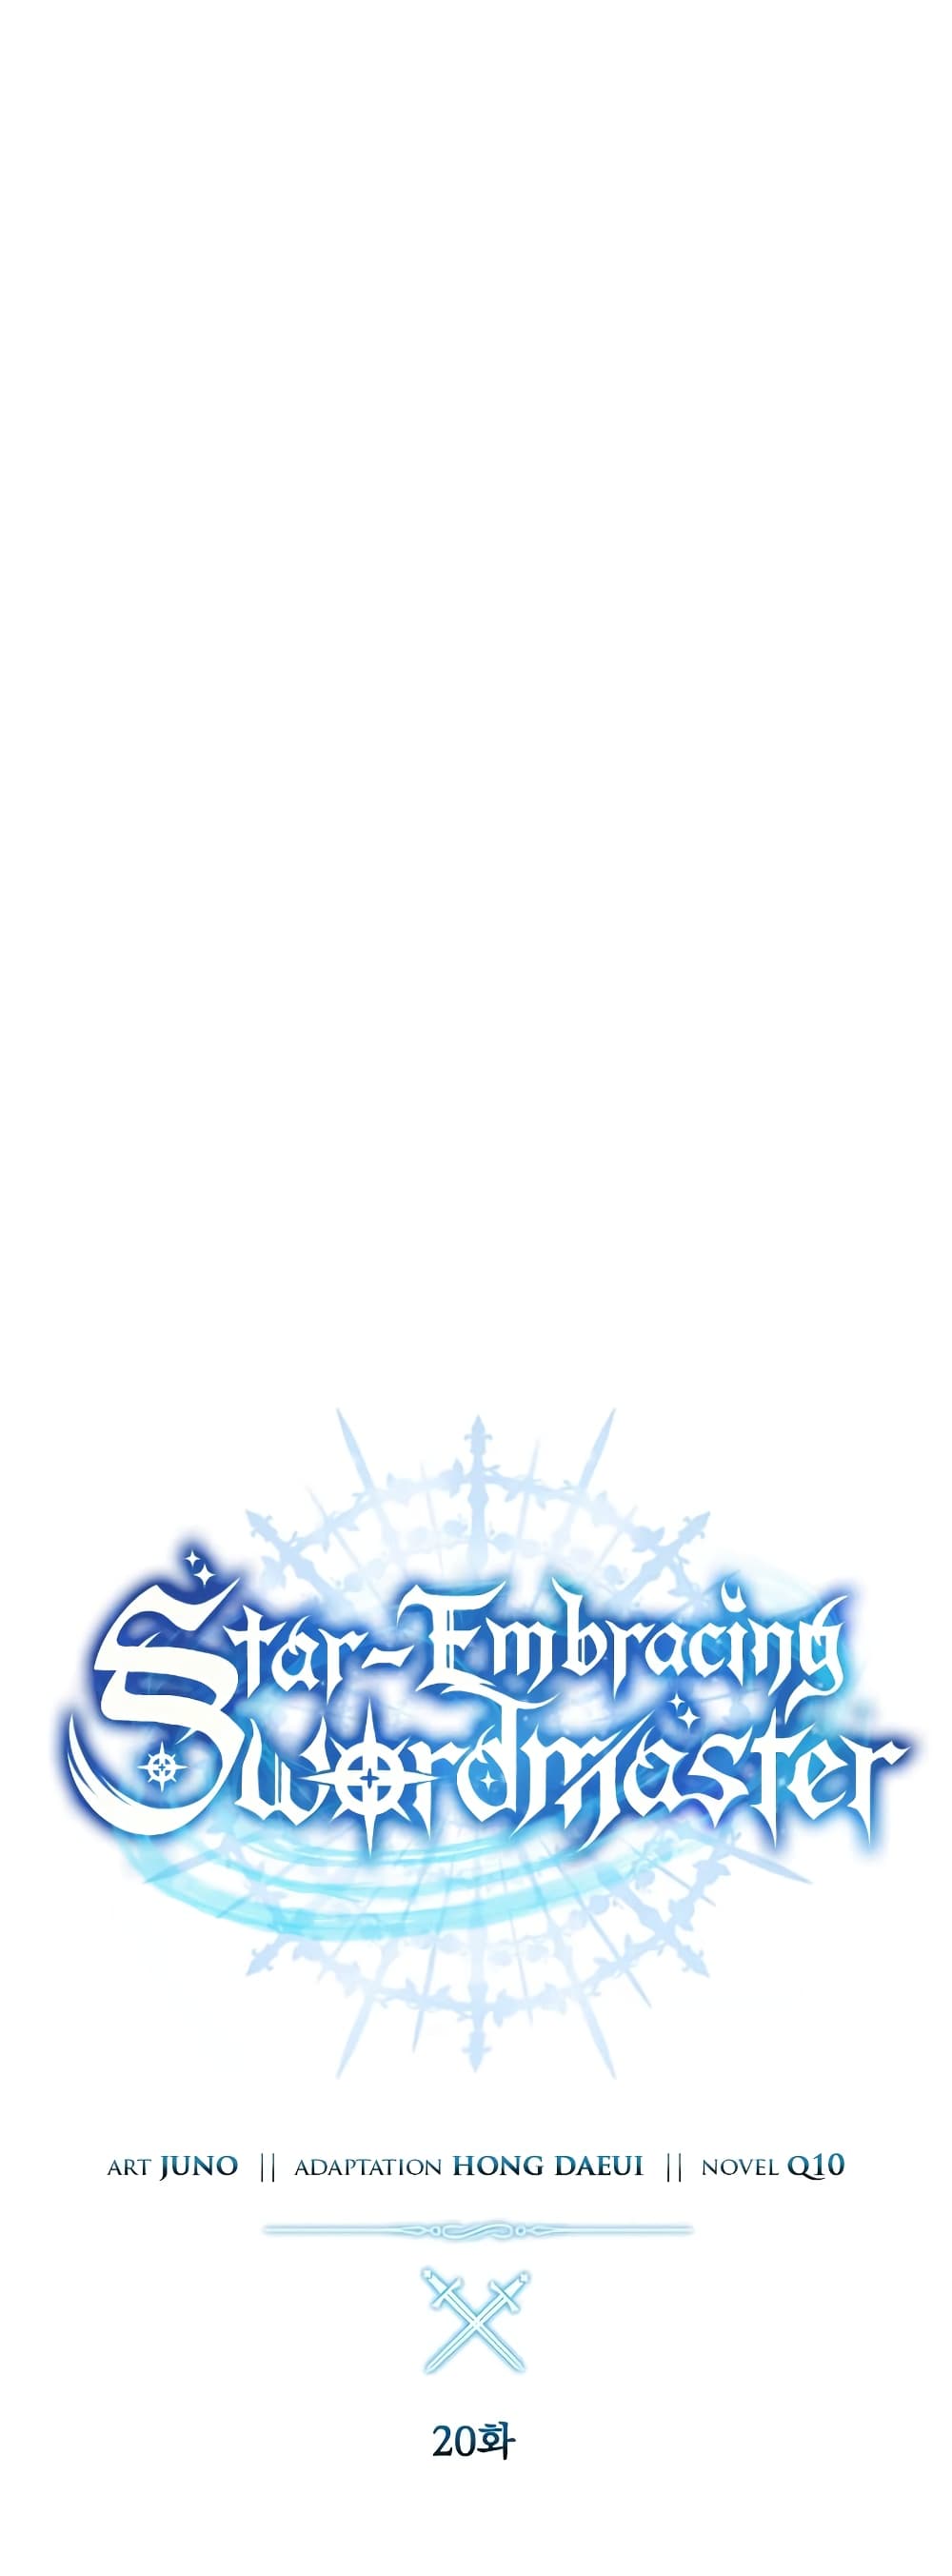 Star-Embracing Swordmaster 20-20